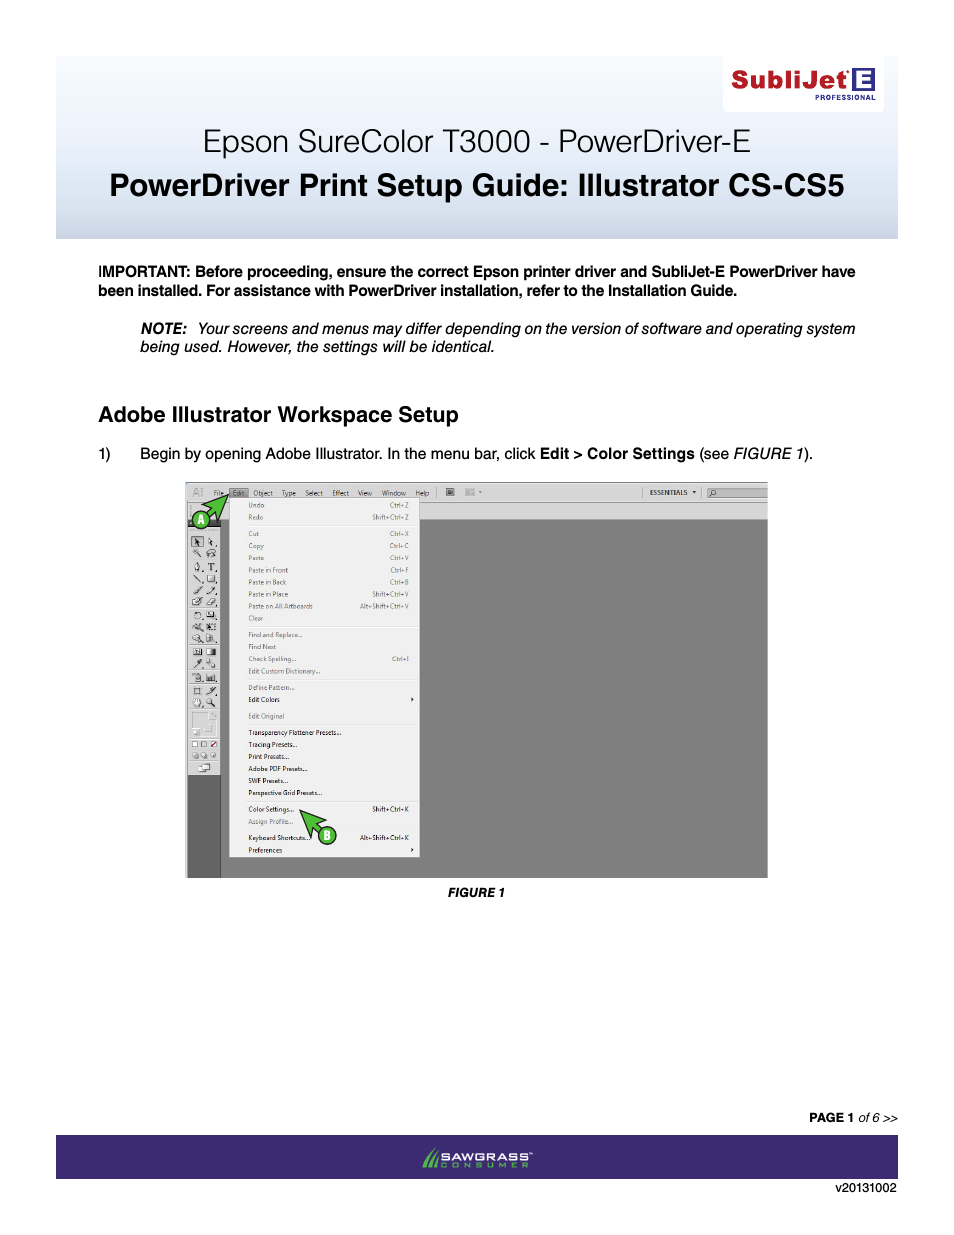 SubliJet E Epson SureColor T3000 (Power Driver Setup): Print & Setup Guide Illustrator CS - CS5